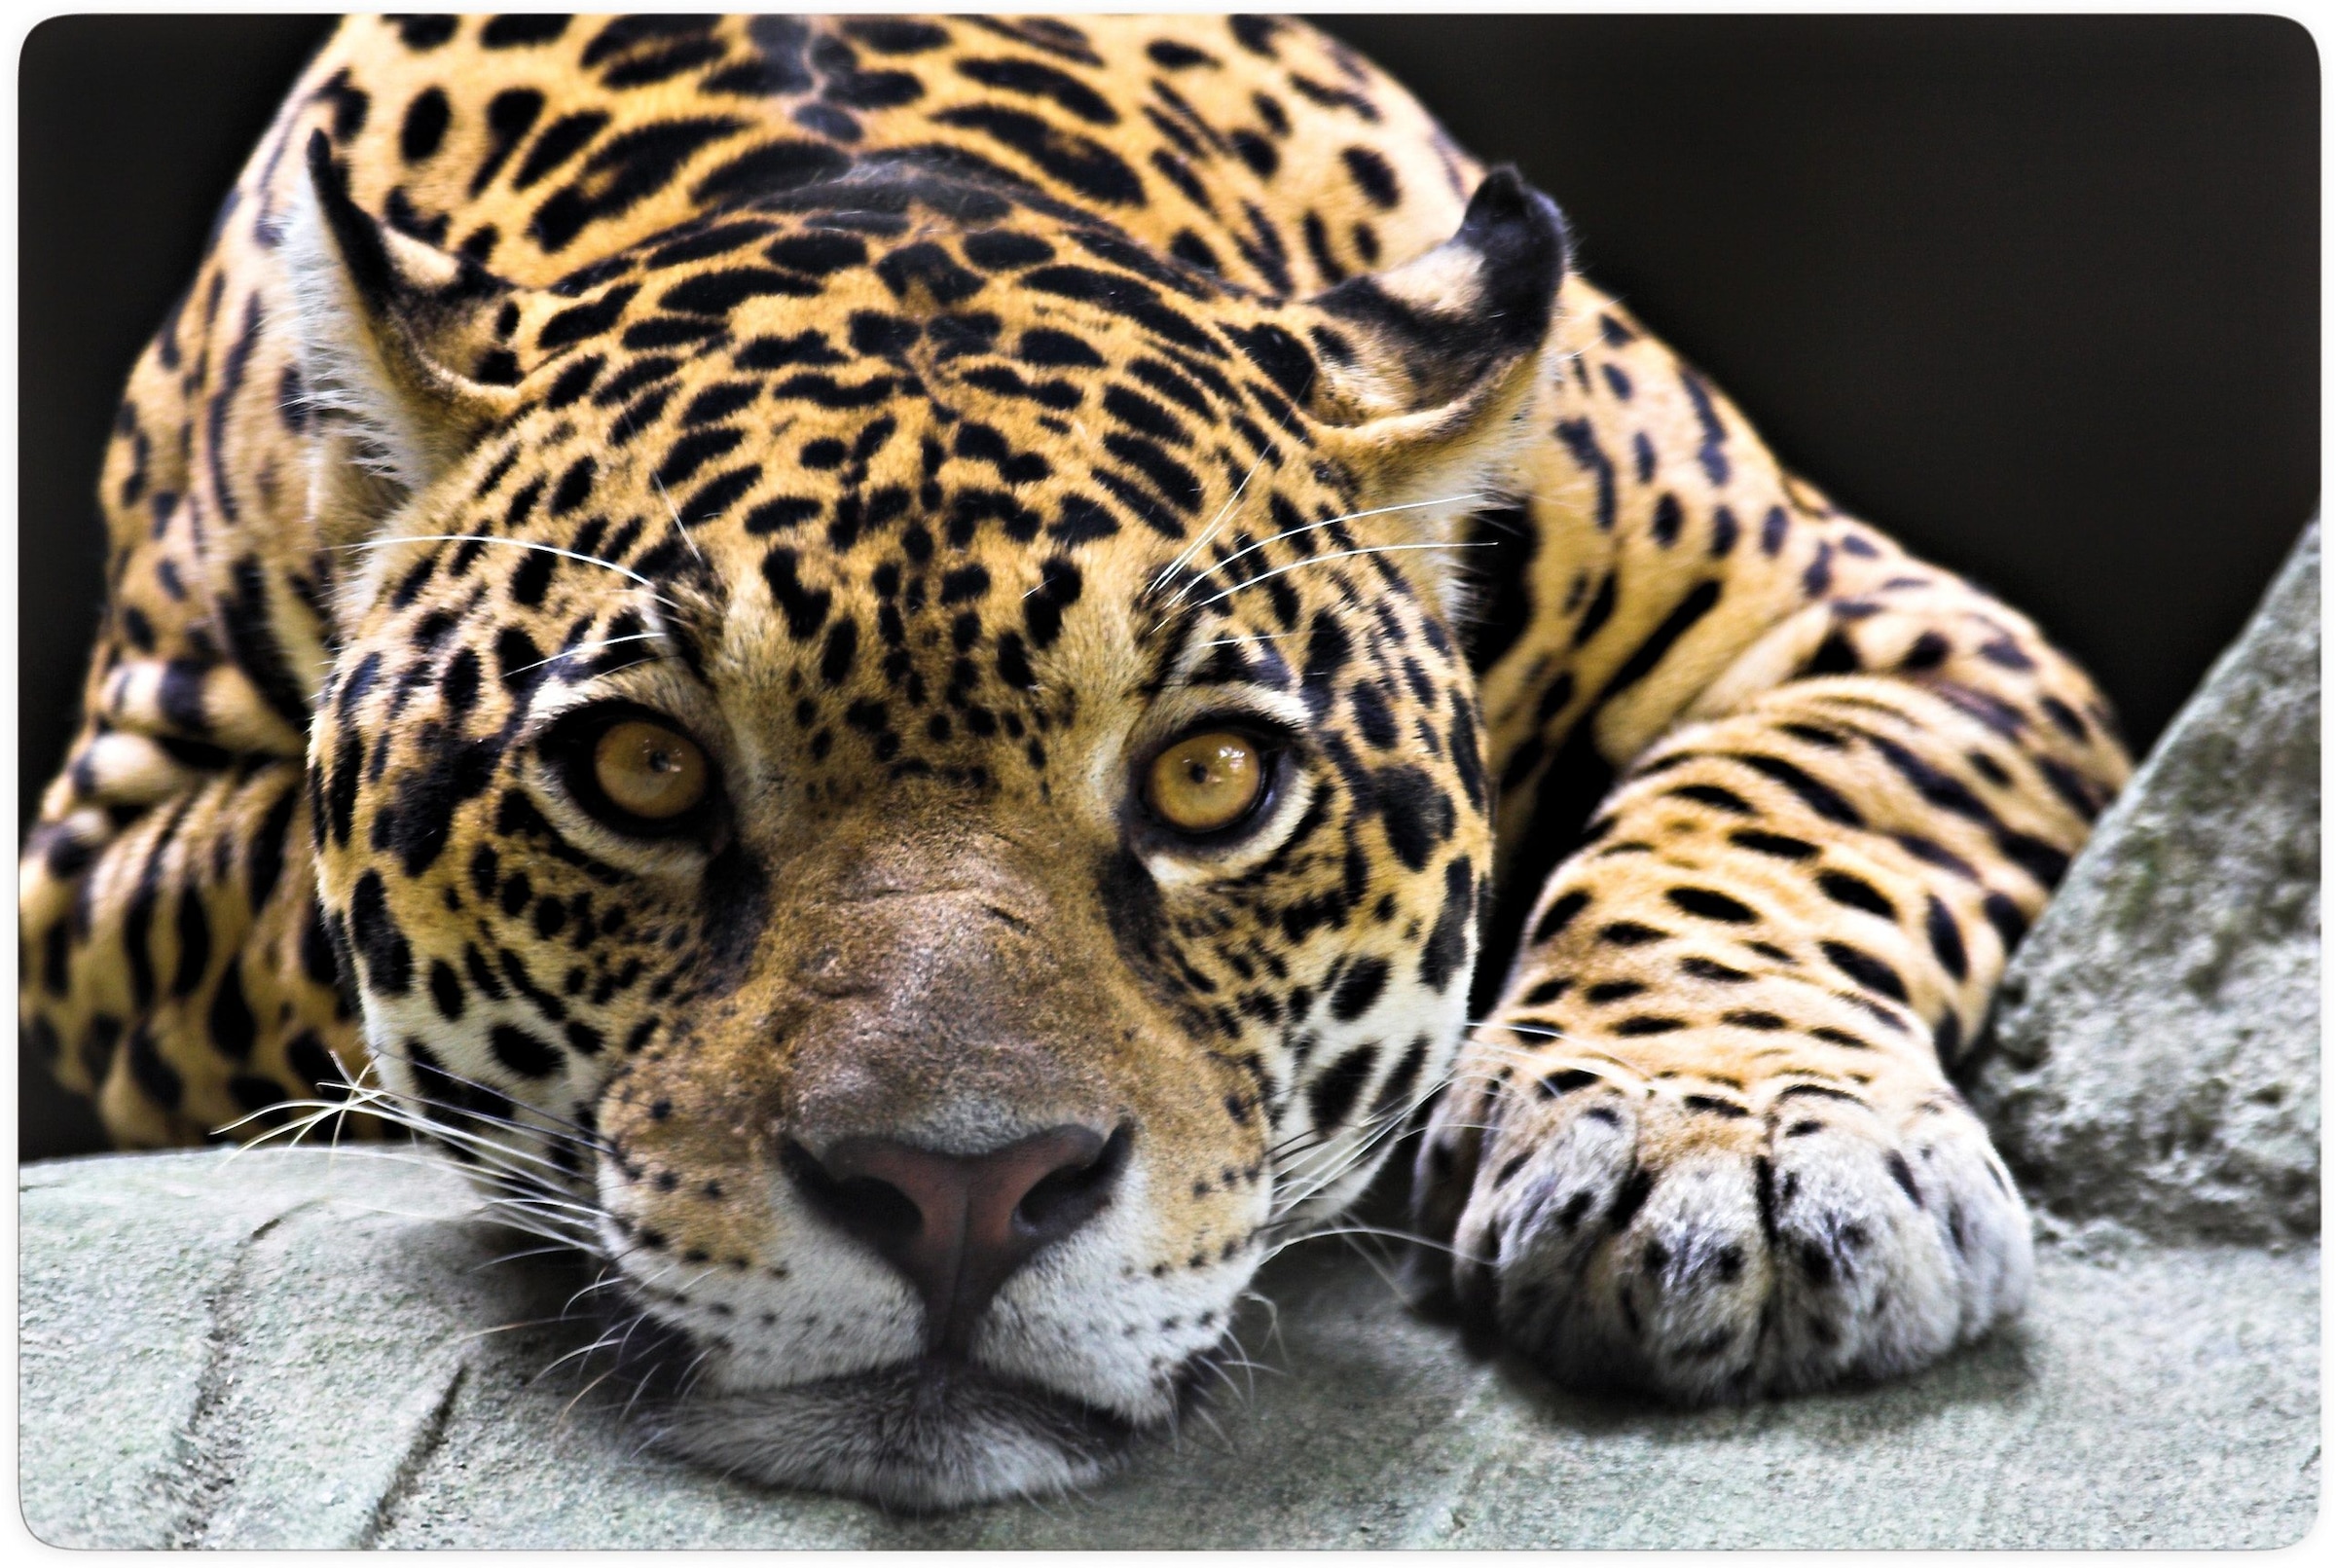 Wall-Art Glasbild »Jaguar«, Schriftzug, Glasposter modern